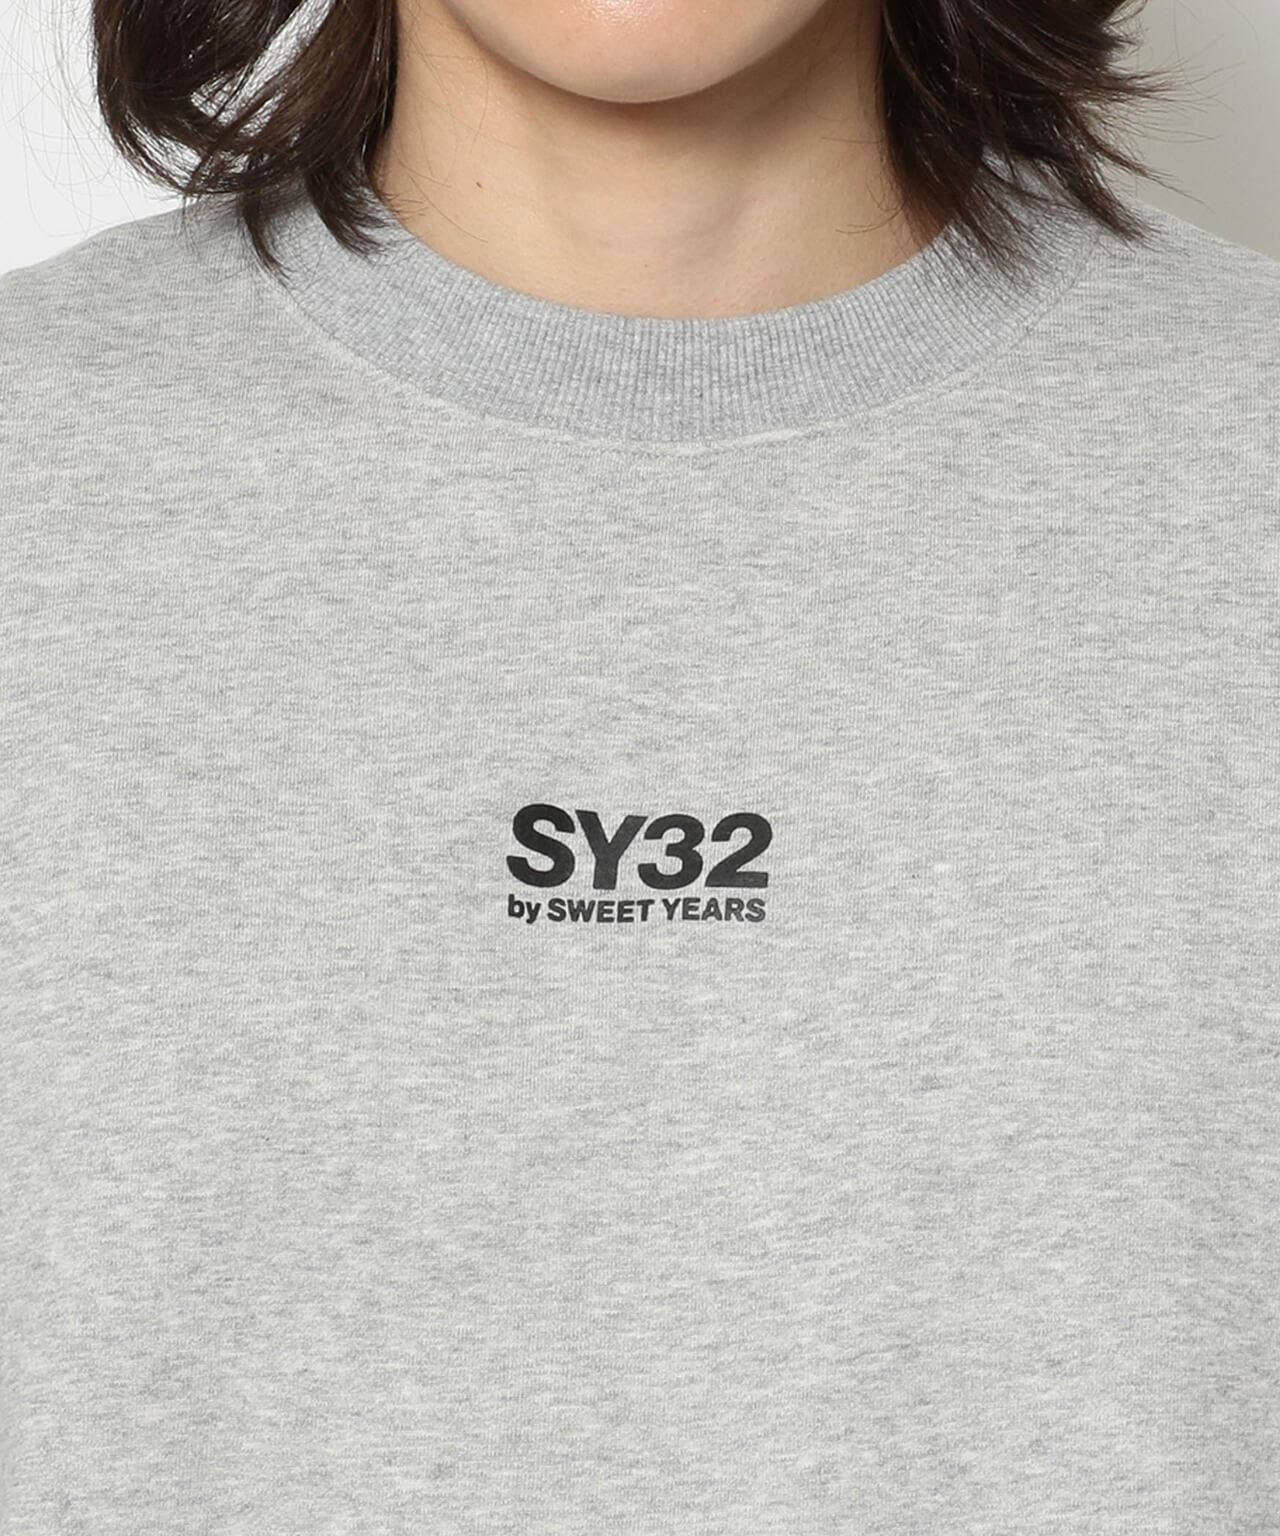 SY32 by SWEET YEARS /エスワイサーティトゥ バイ スィートイヤーズ ...